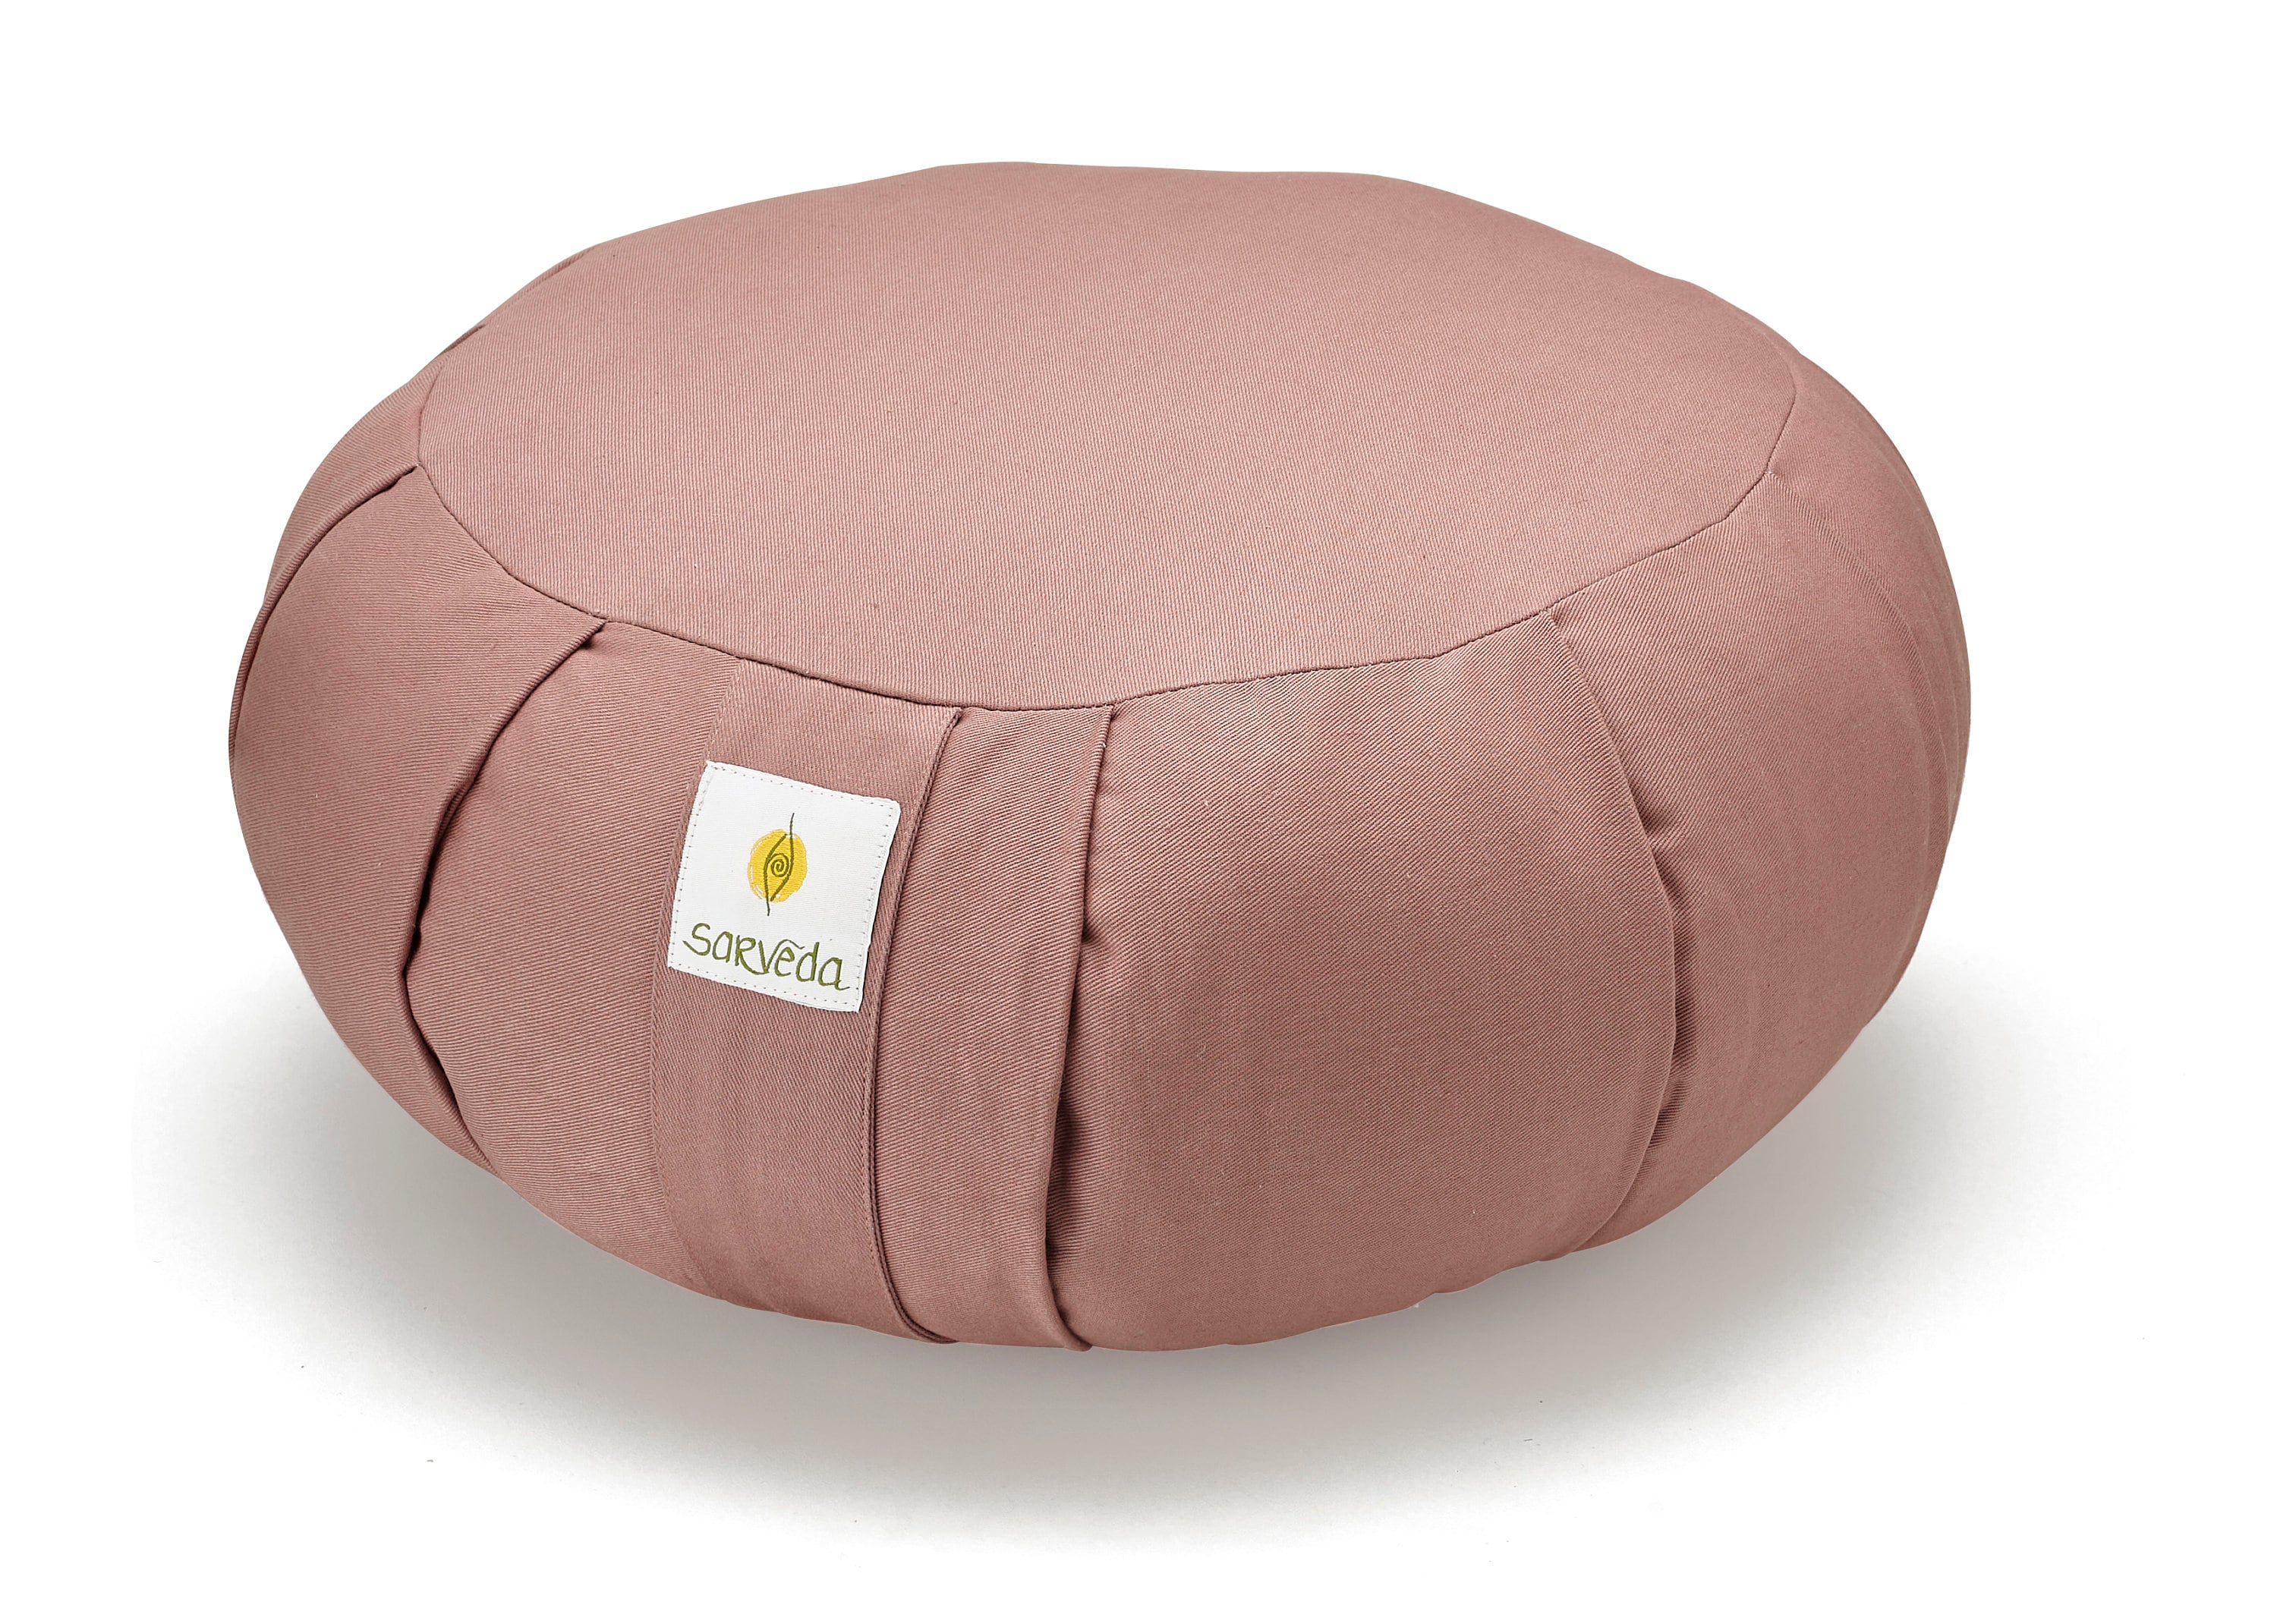 Sol Living Zafu Meditation Cushion Round Yoga Pillow Floor Cushions Lotus  Sitting Pose Premium Cotton Bolster Meditation Pillow Pouf - Yoga  Meditation Accessories - 15 x 15 x 7 - Pink 